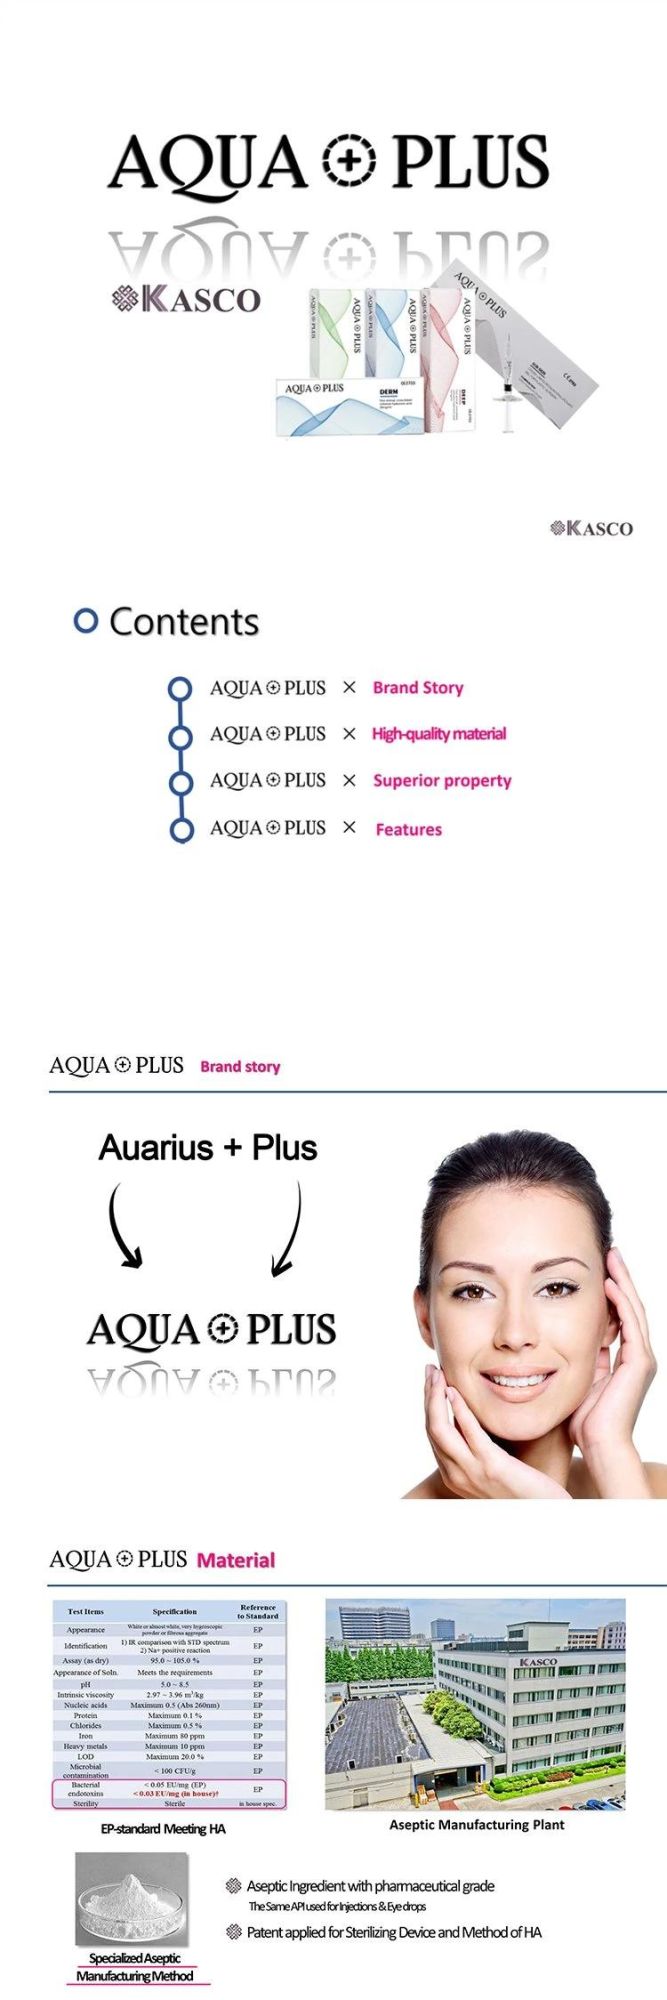 Aqua Plus Brand Deep Wrinkle Remover Filler Cross Linked Hyaluronic Acid 2ml Deep Lines